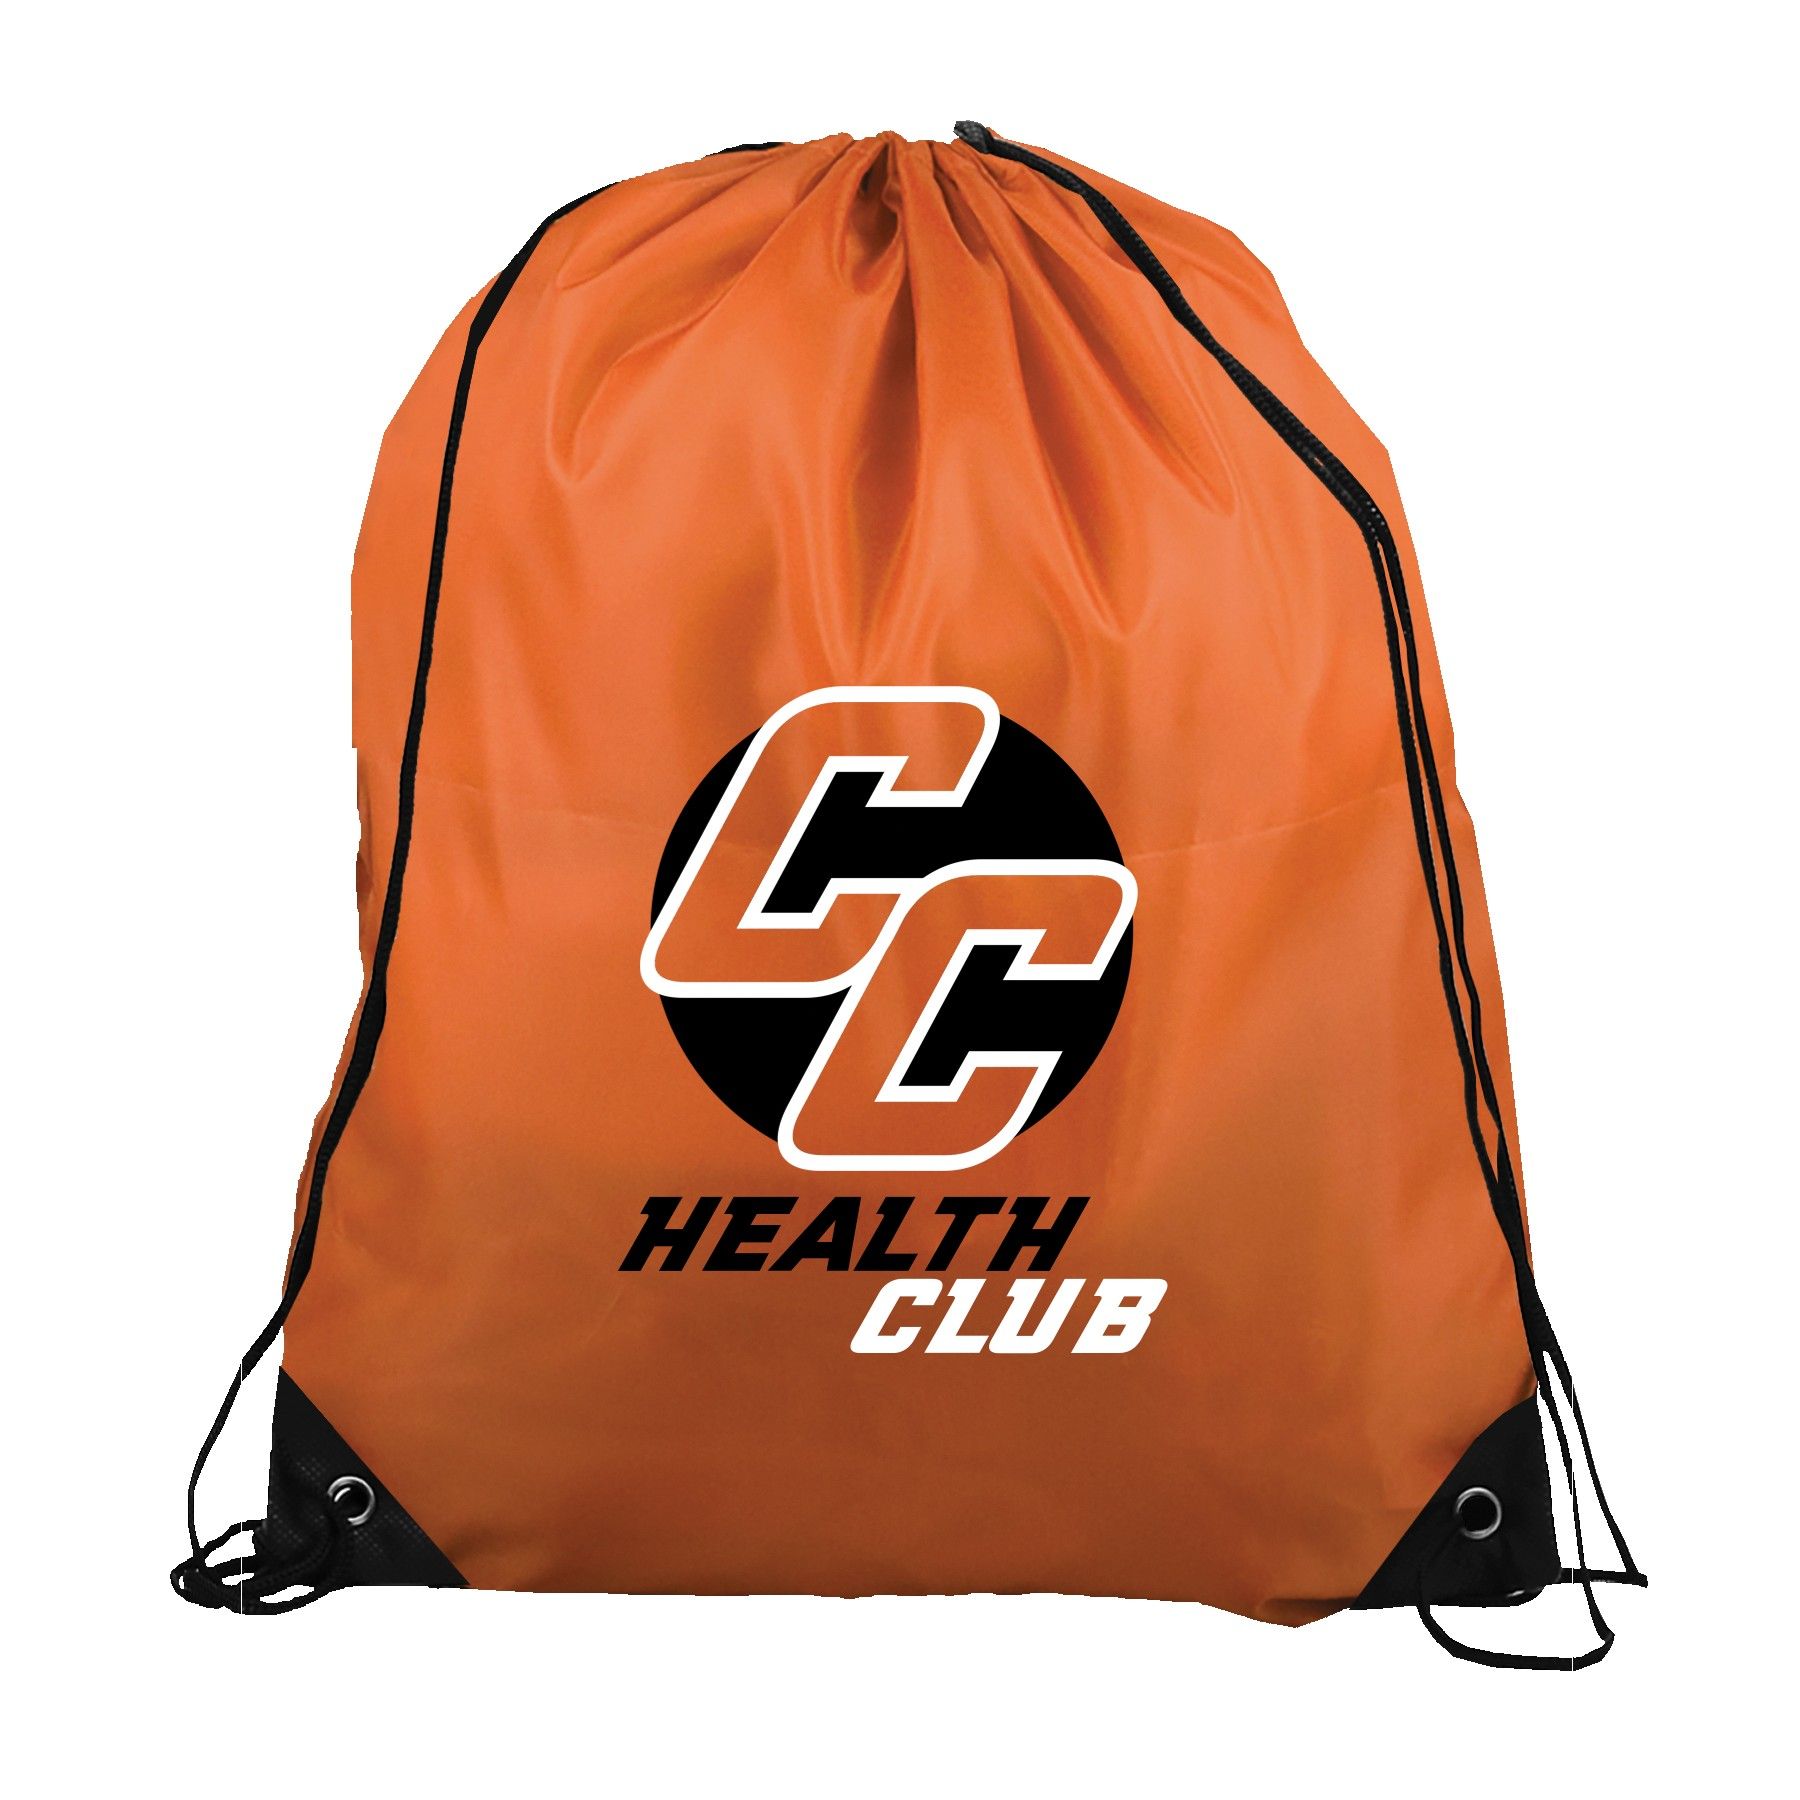 Orange drawstring backpack with branding